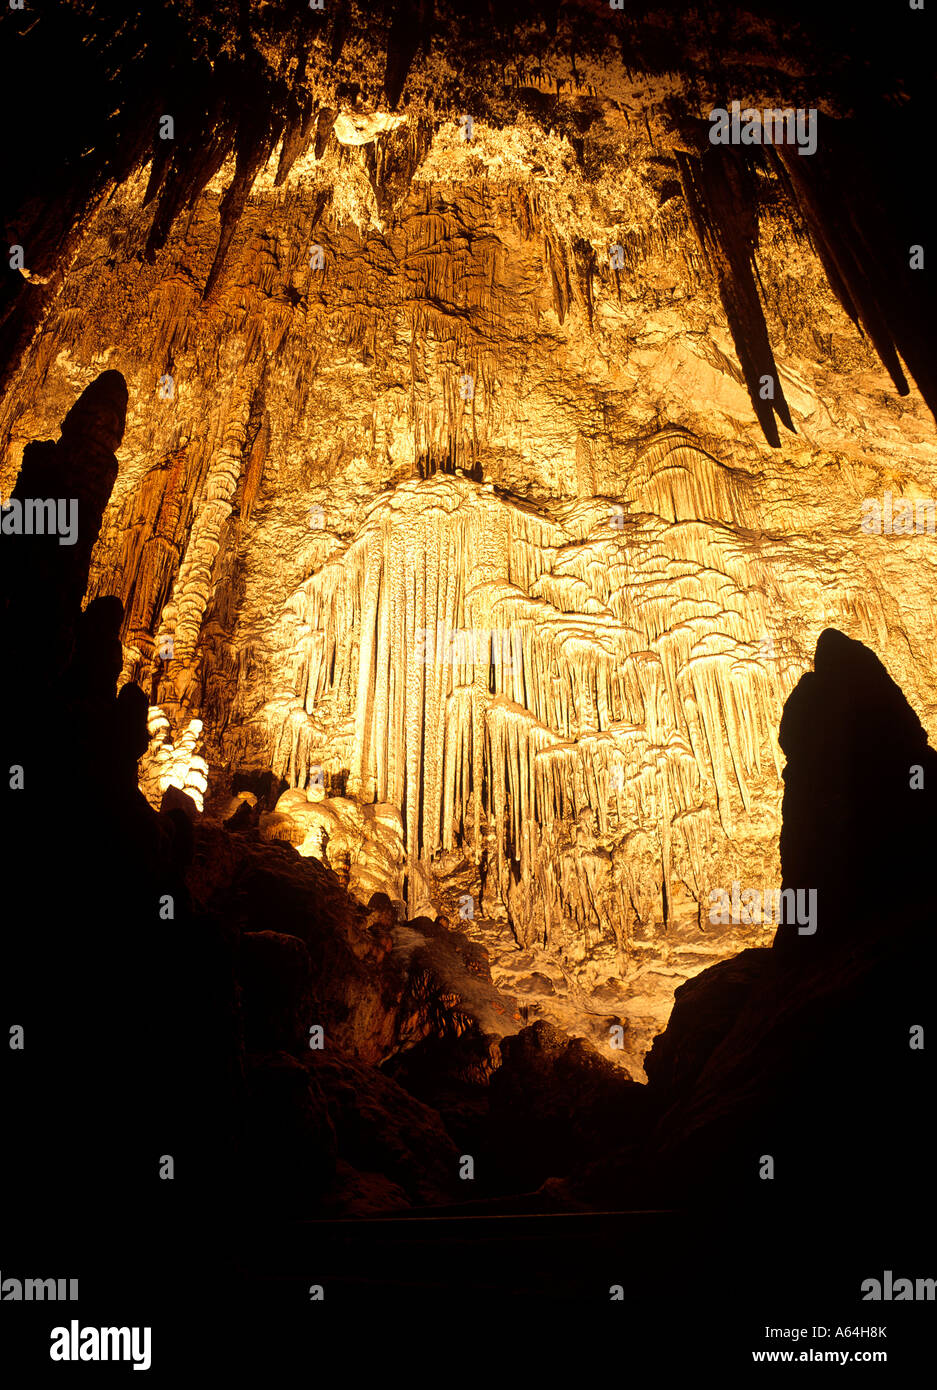 Grotta cueva de arta isola di Maiorca Isole Baleari Spagna Foto Stock